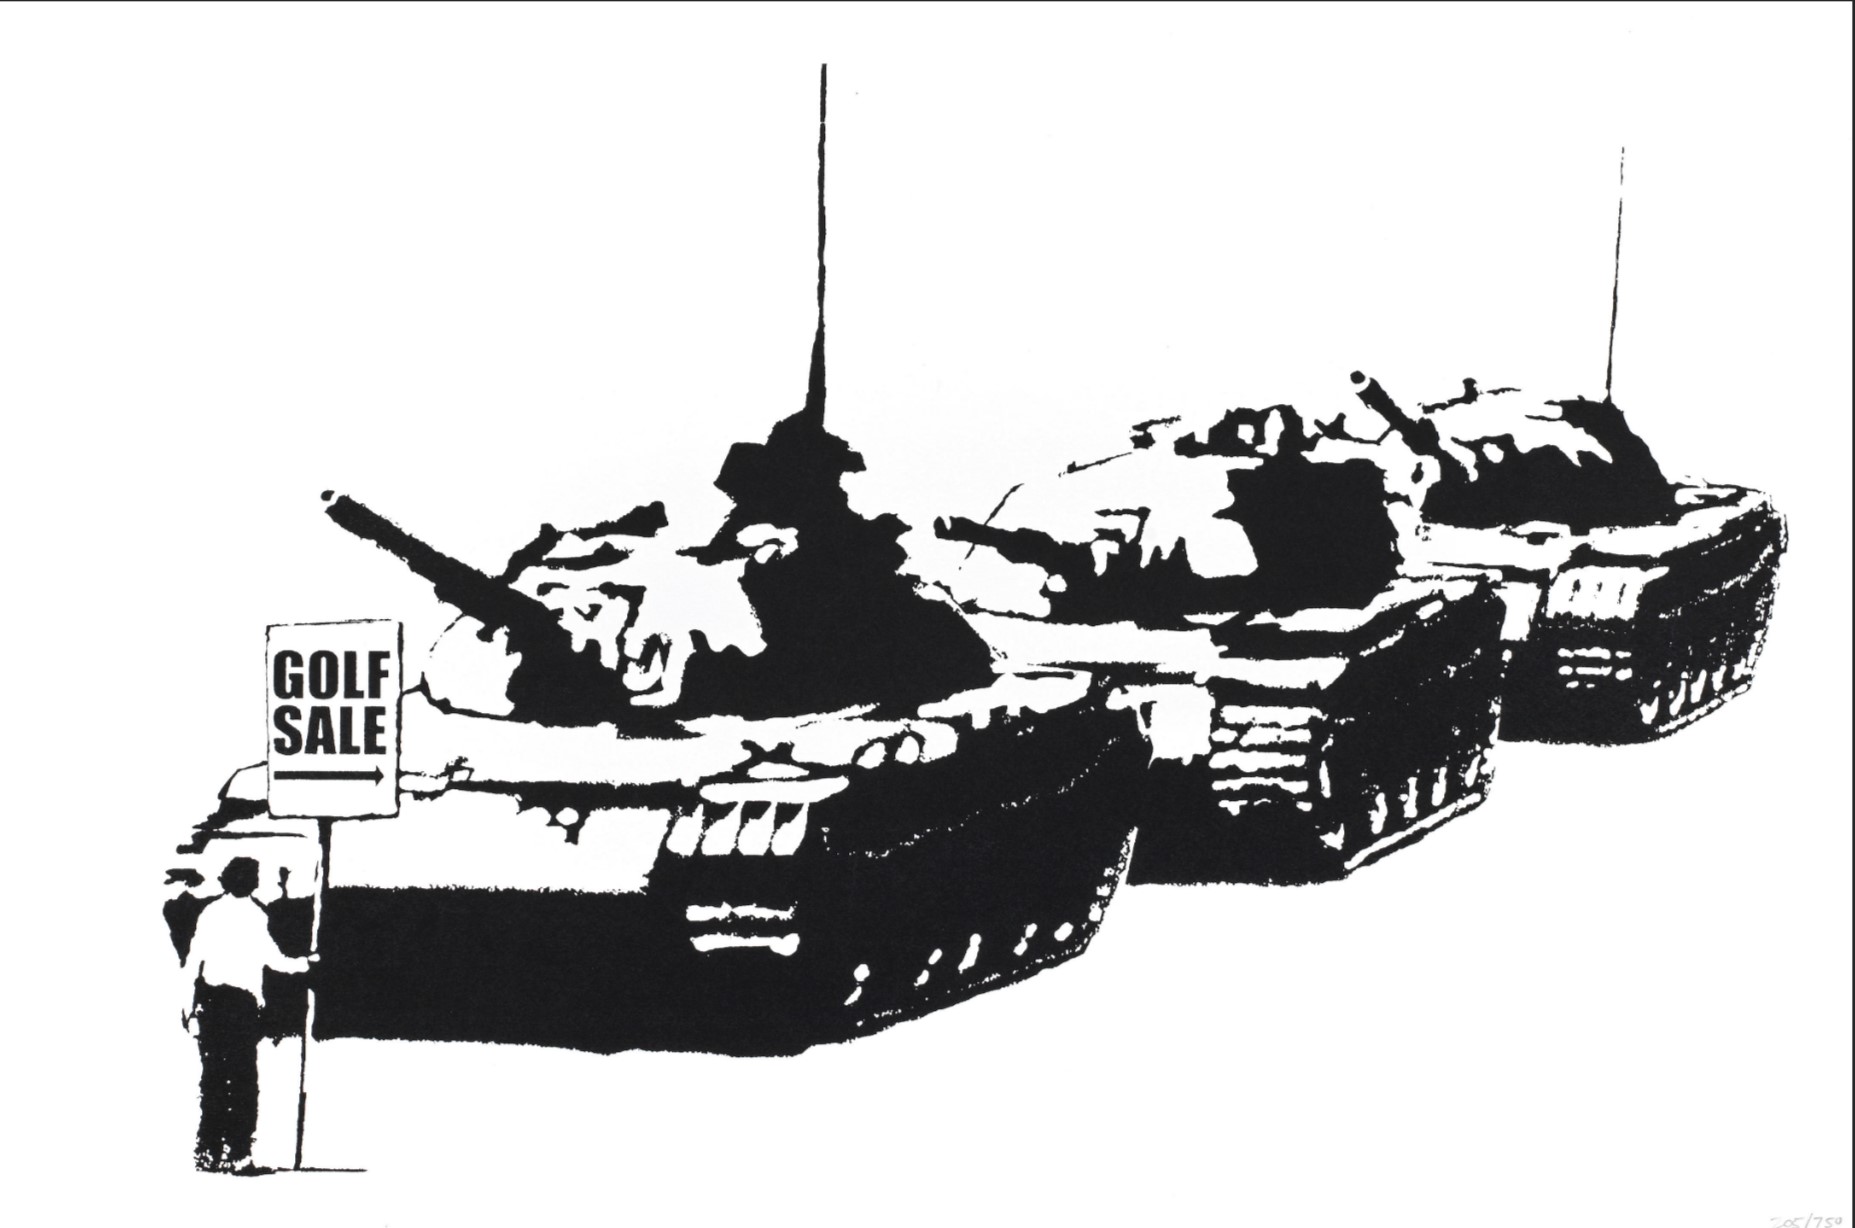 General 1855x1228 China Chinese monochrome men tank Tank Man signs protestors Tiananmen Square artwork humor military vehicle golf Banksy graffiti minimalism simple background standing white background